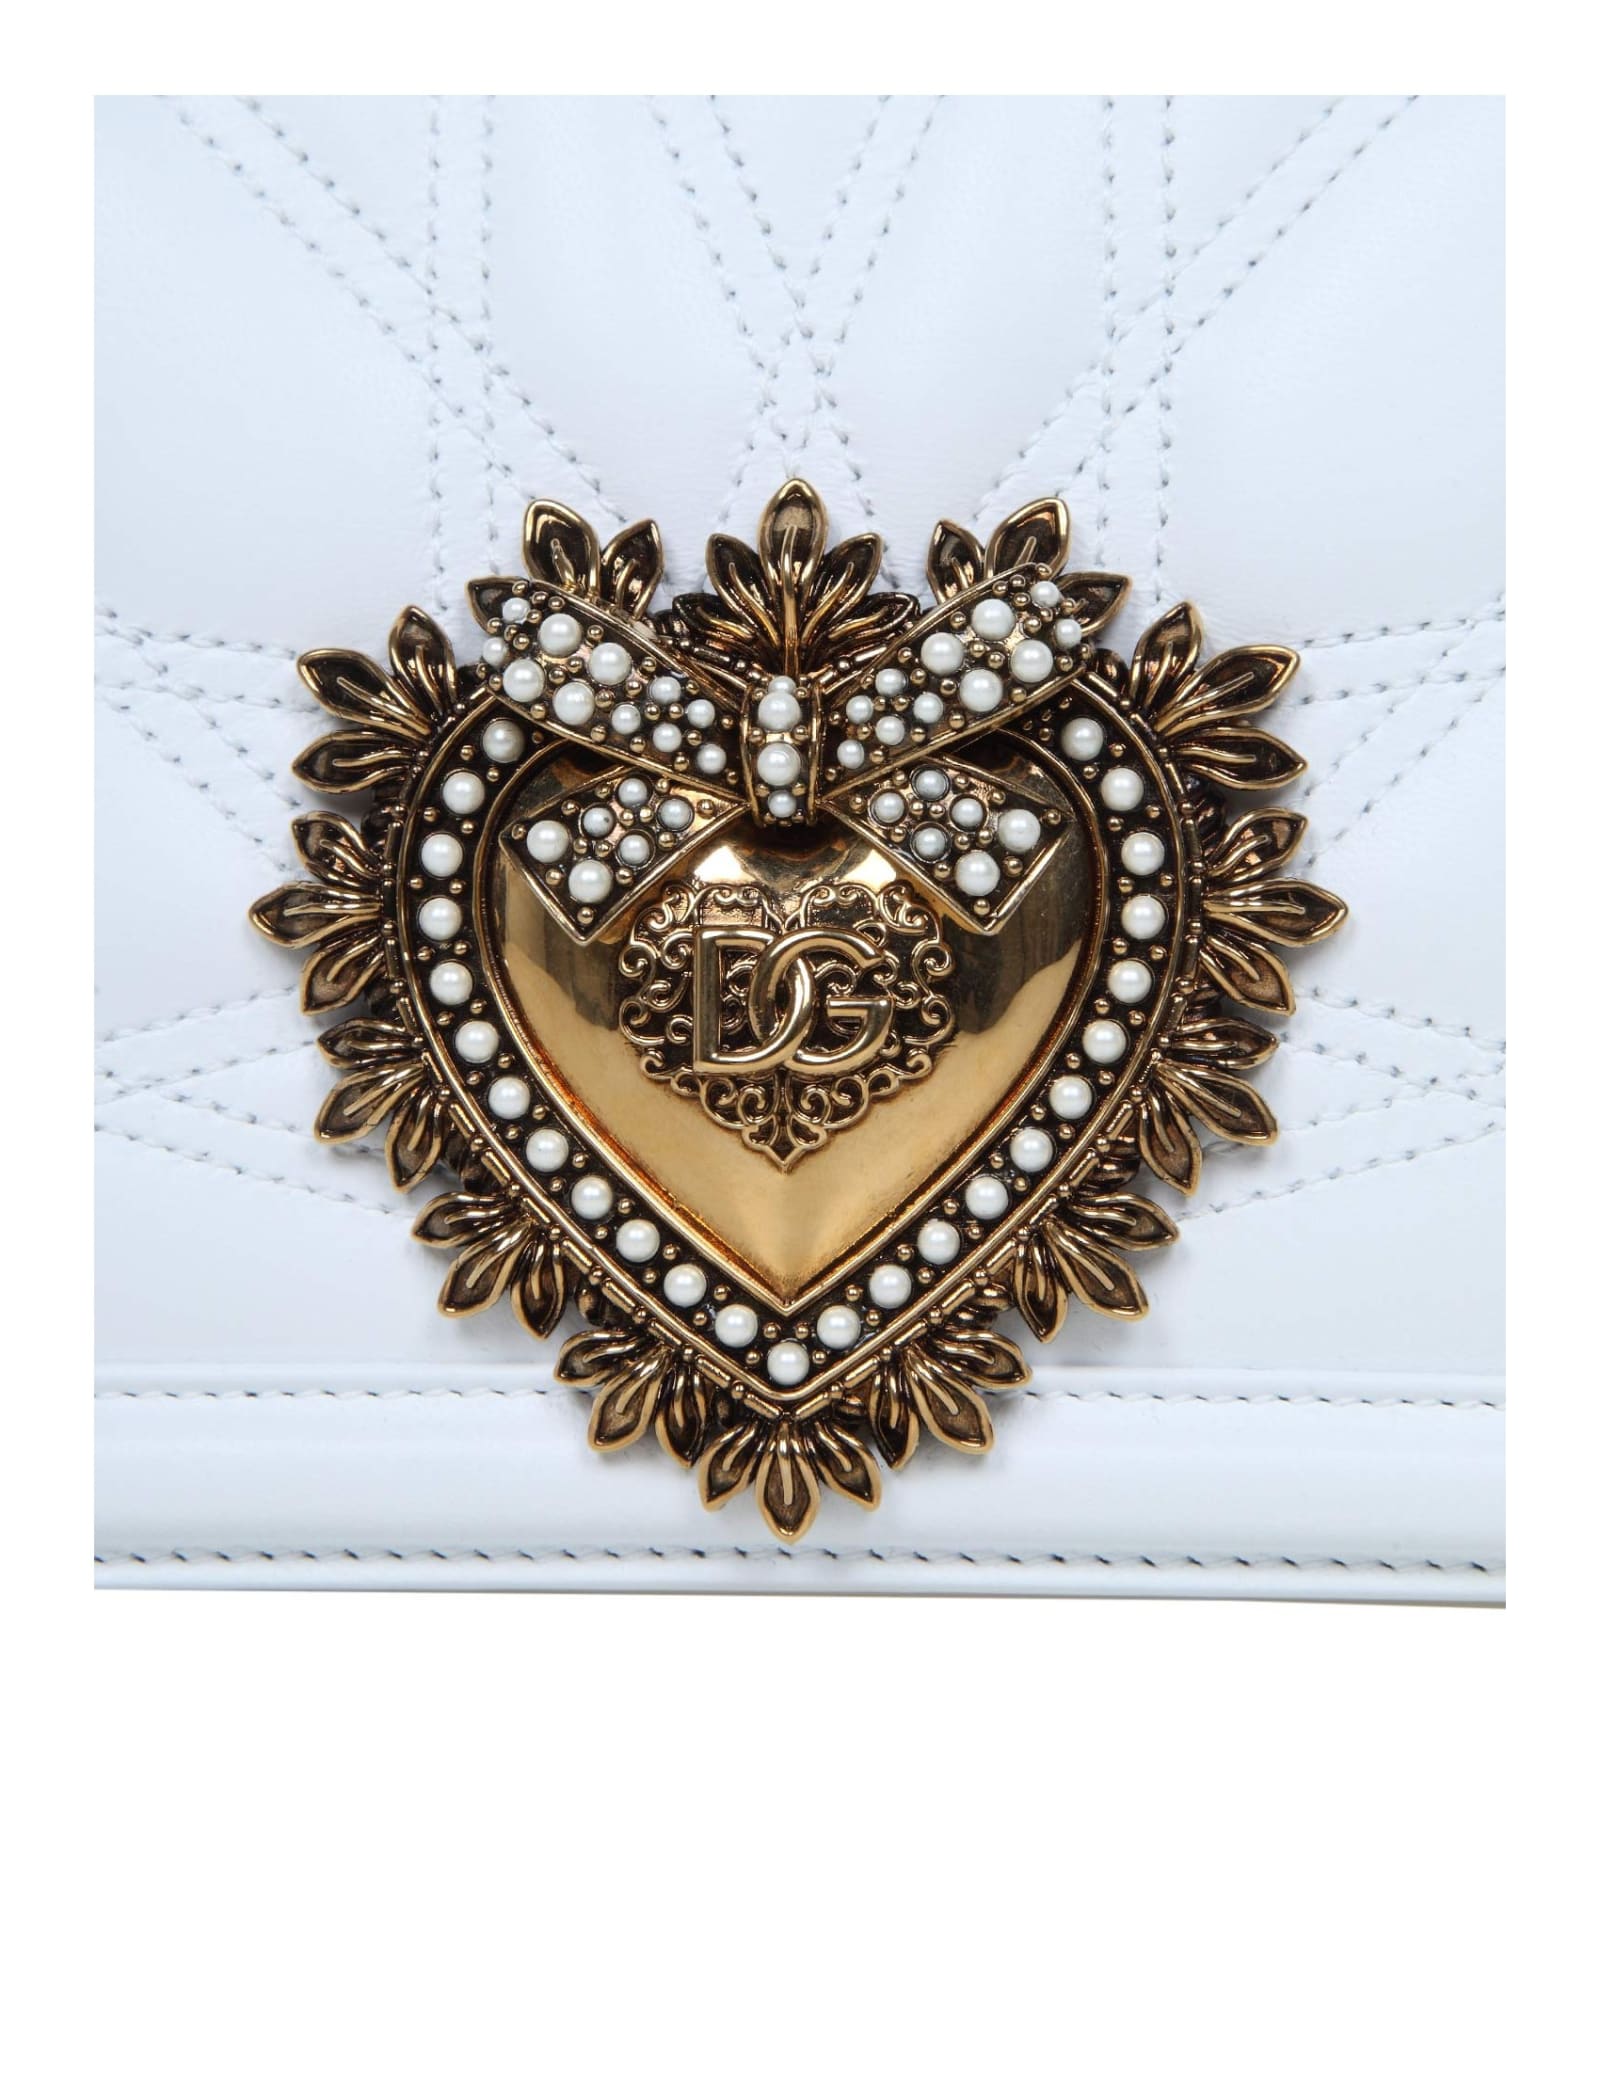 Shop Dolce & Gabbana Medium Devotion Bag In Matelassé Nappa Color White In Optical White